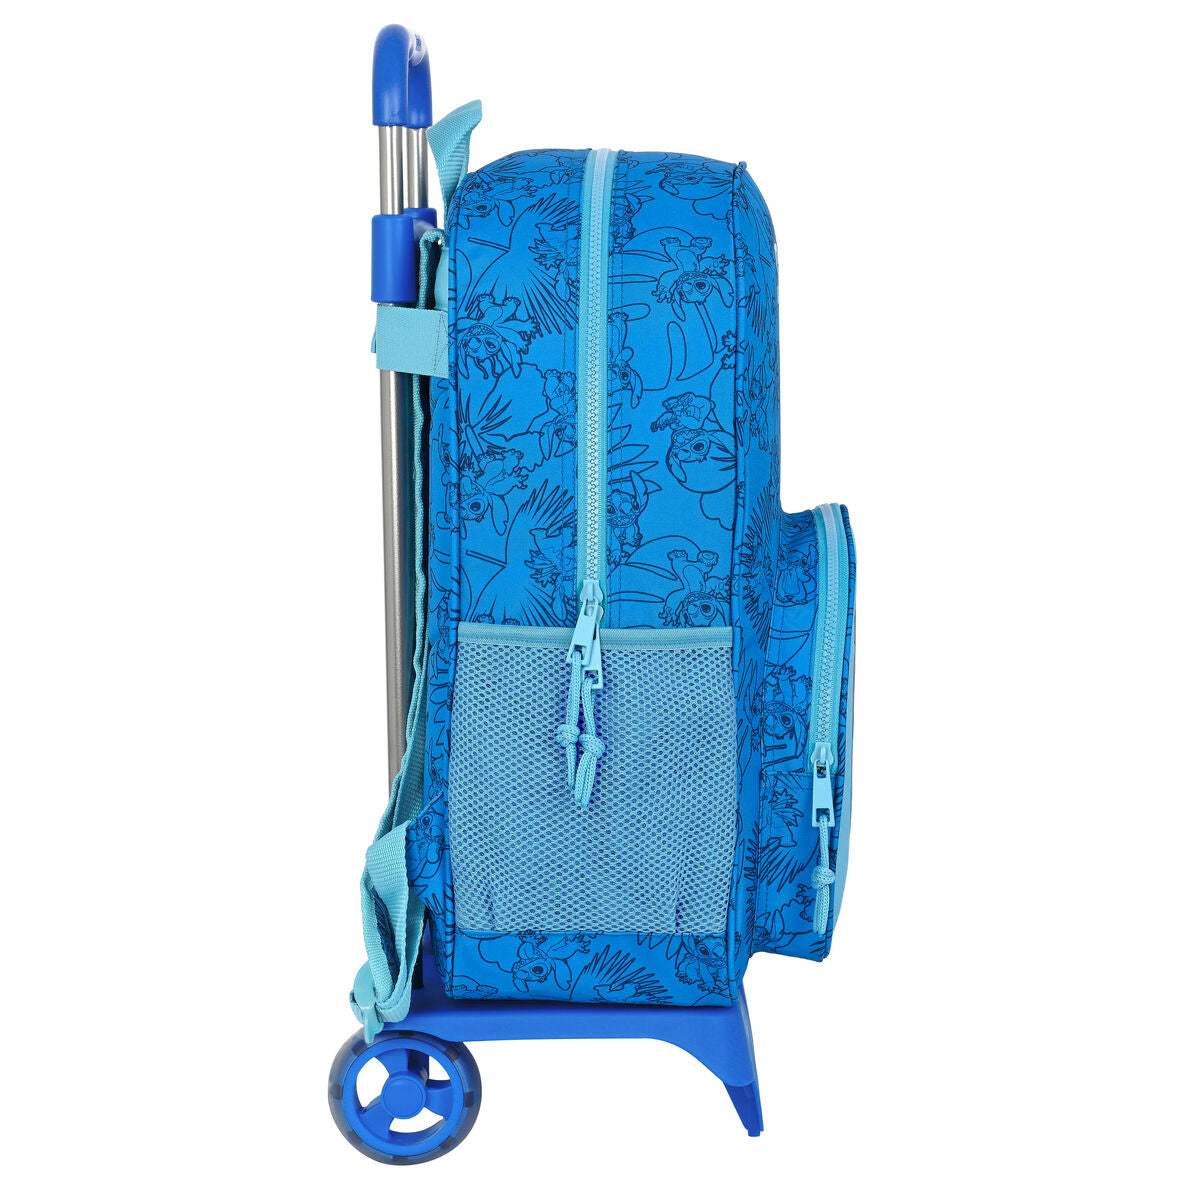 Cartable Stitch Bleu 33 x 42 x 14 cm